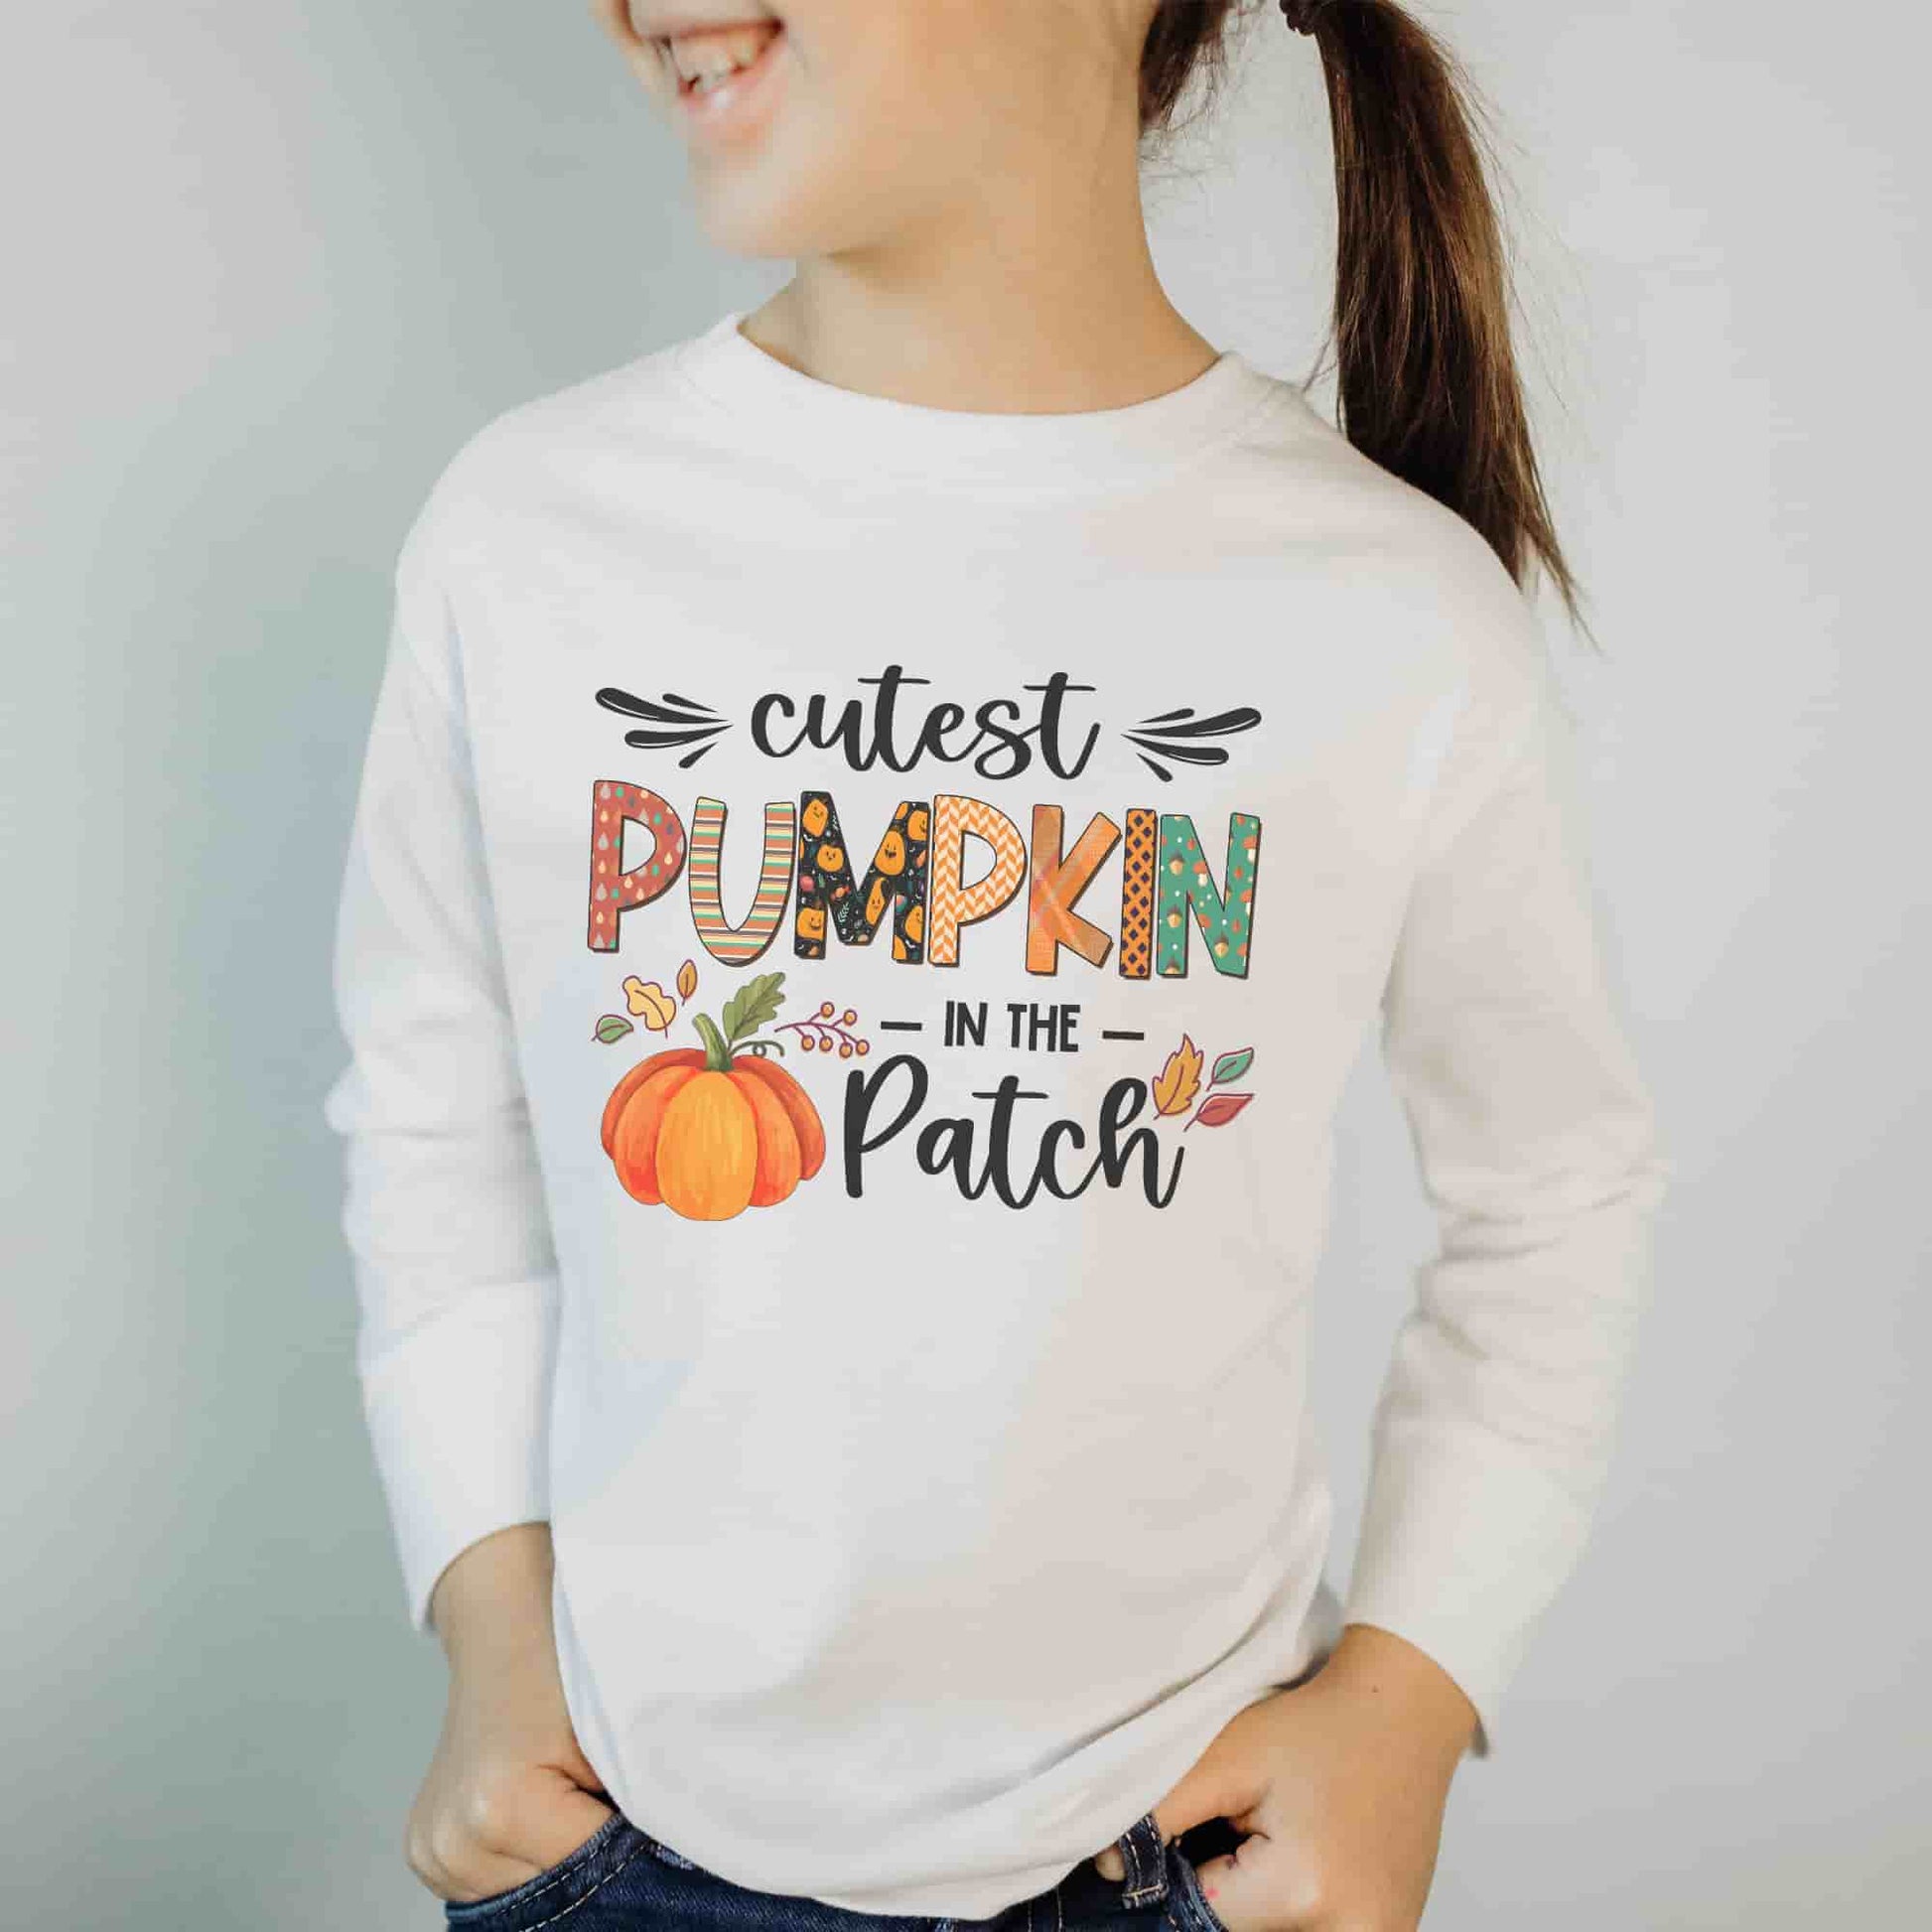 Cutest Pumpkin in the patch t-shirt model